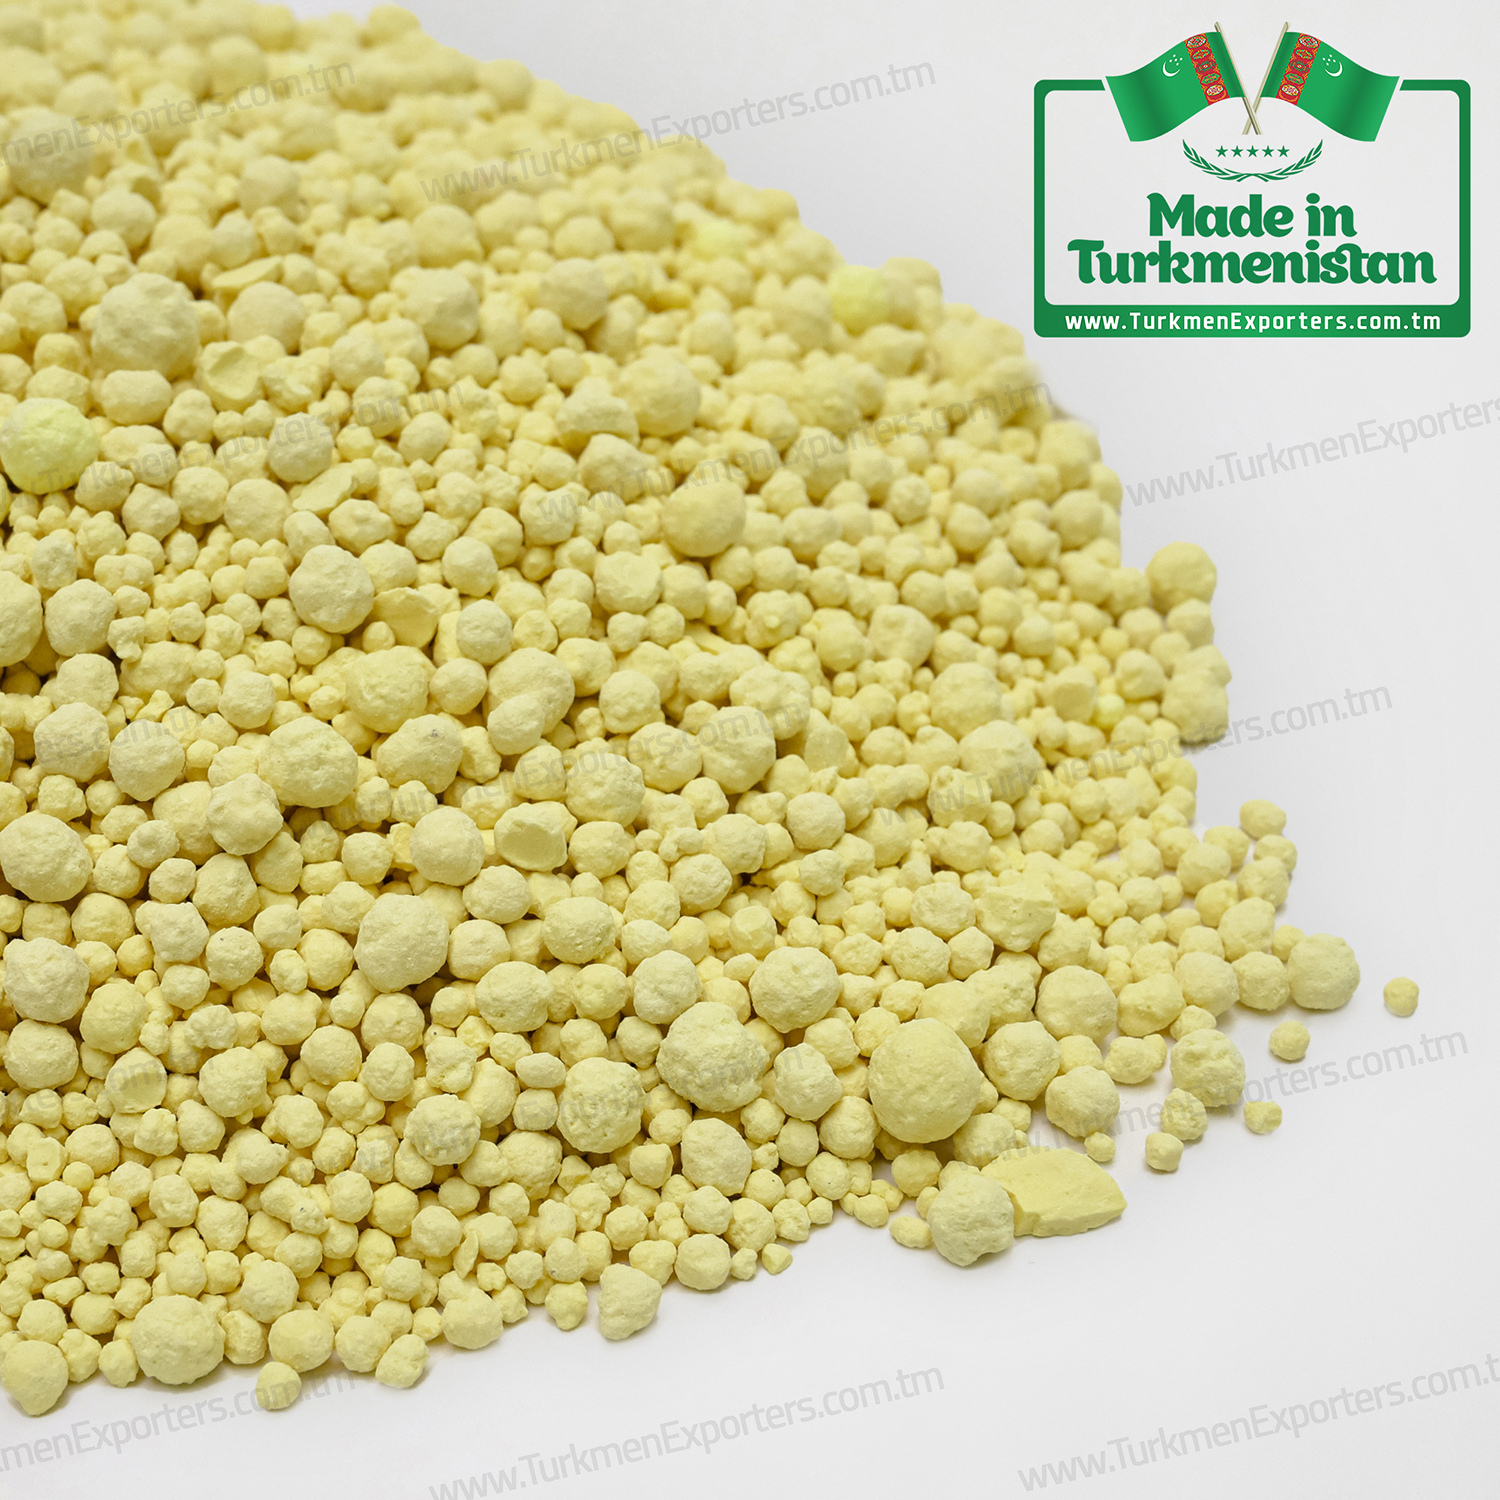 Granular sulphur Made in Turkmenistan | Turkmen Export, Import & Trading Services Company